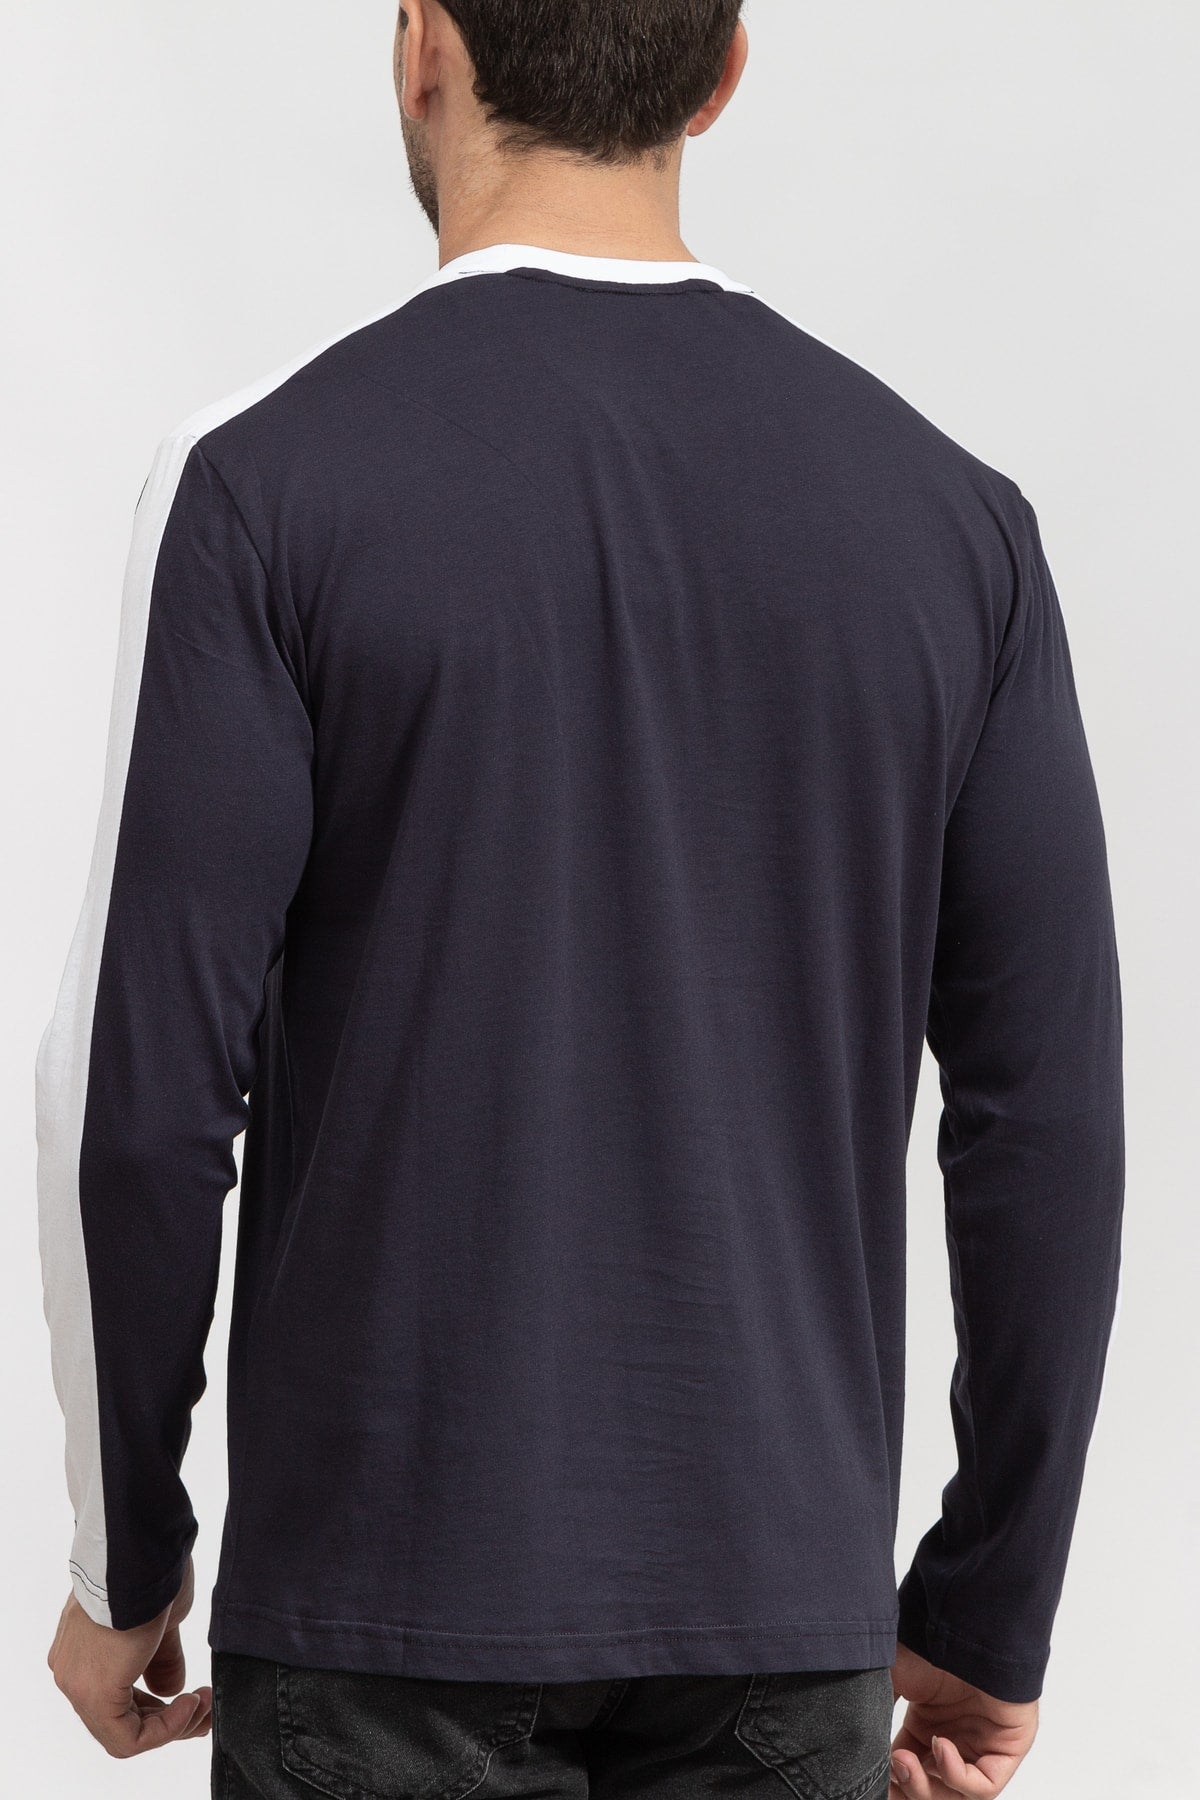 Men's Long Sleeve T-shirt6lpt07pj02z